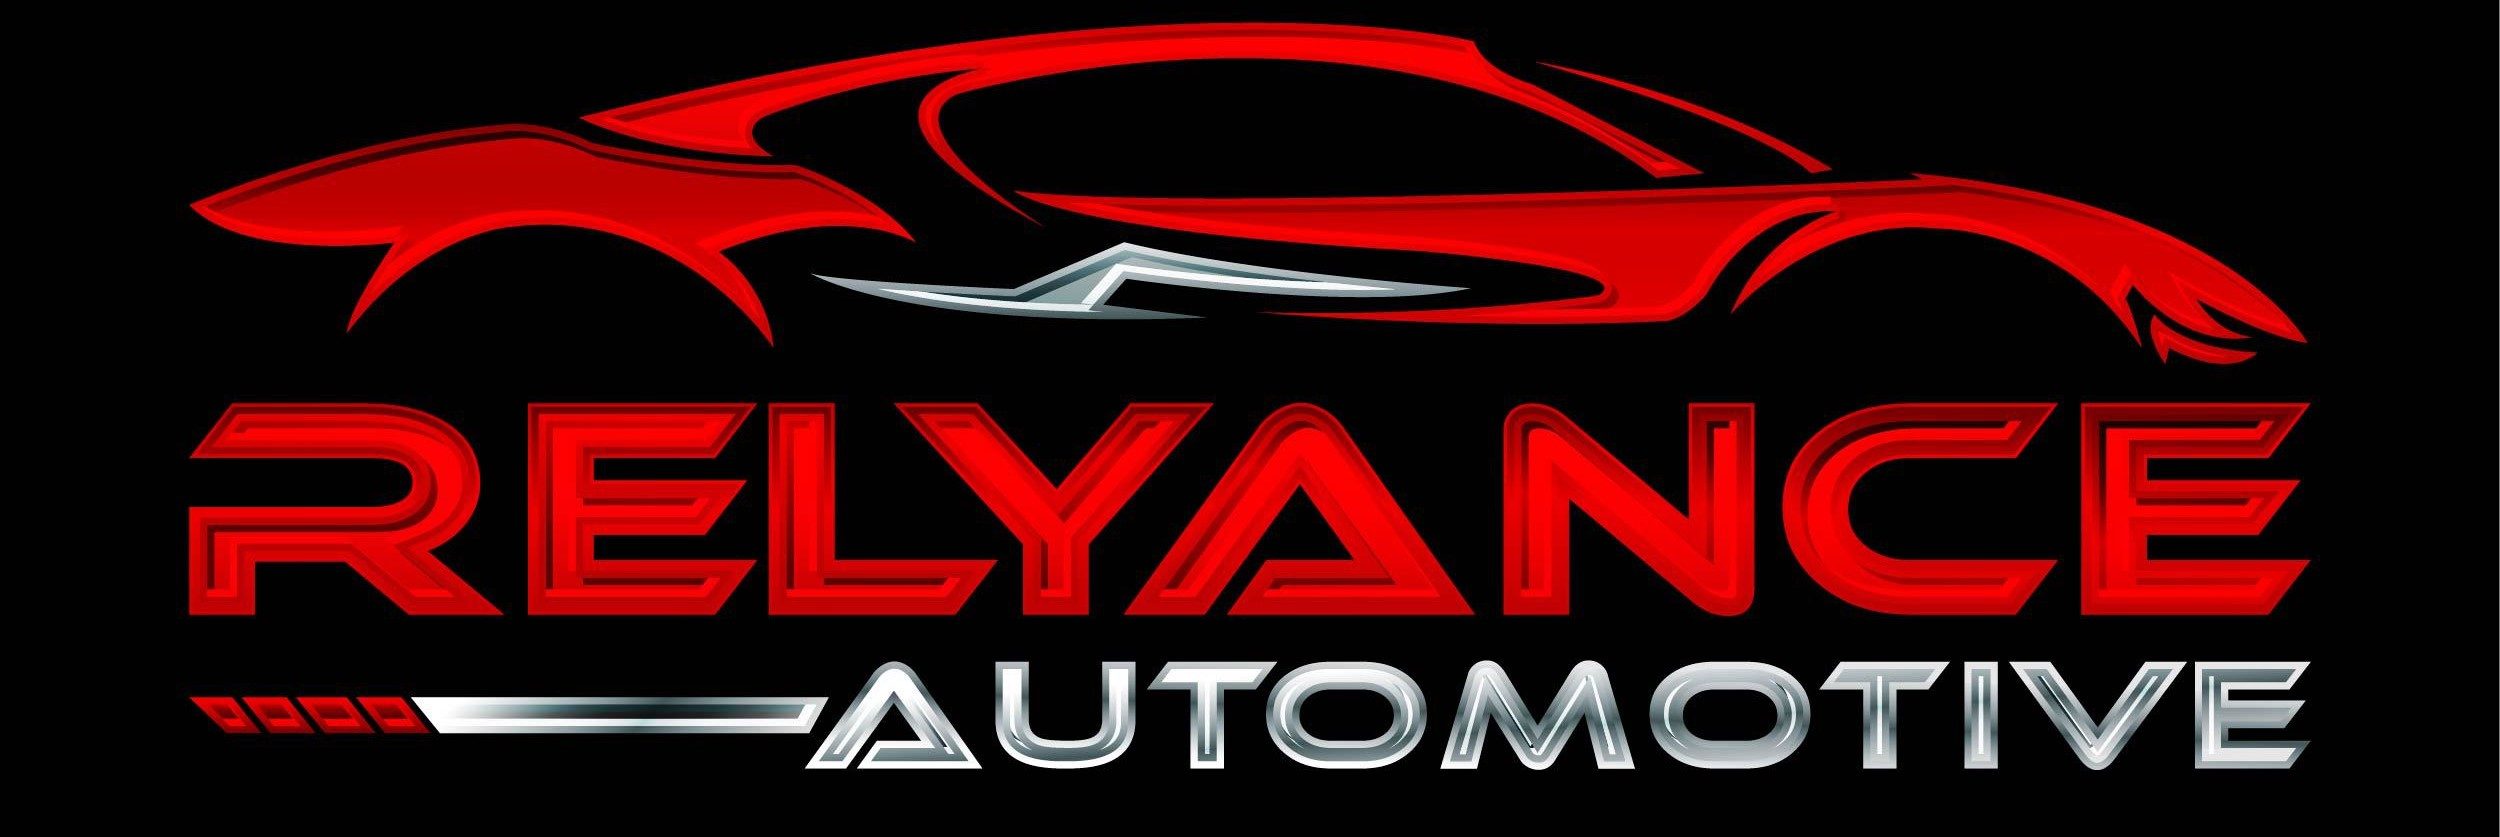 Relyance Automotive